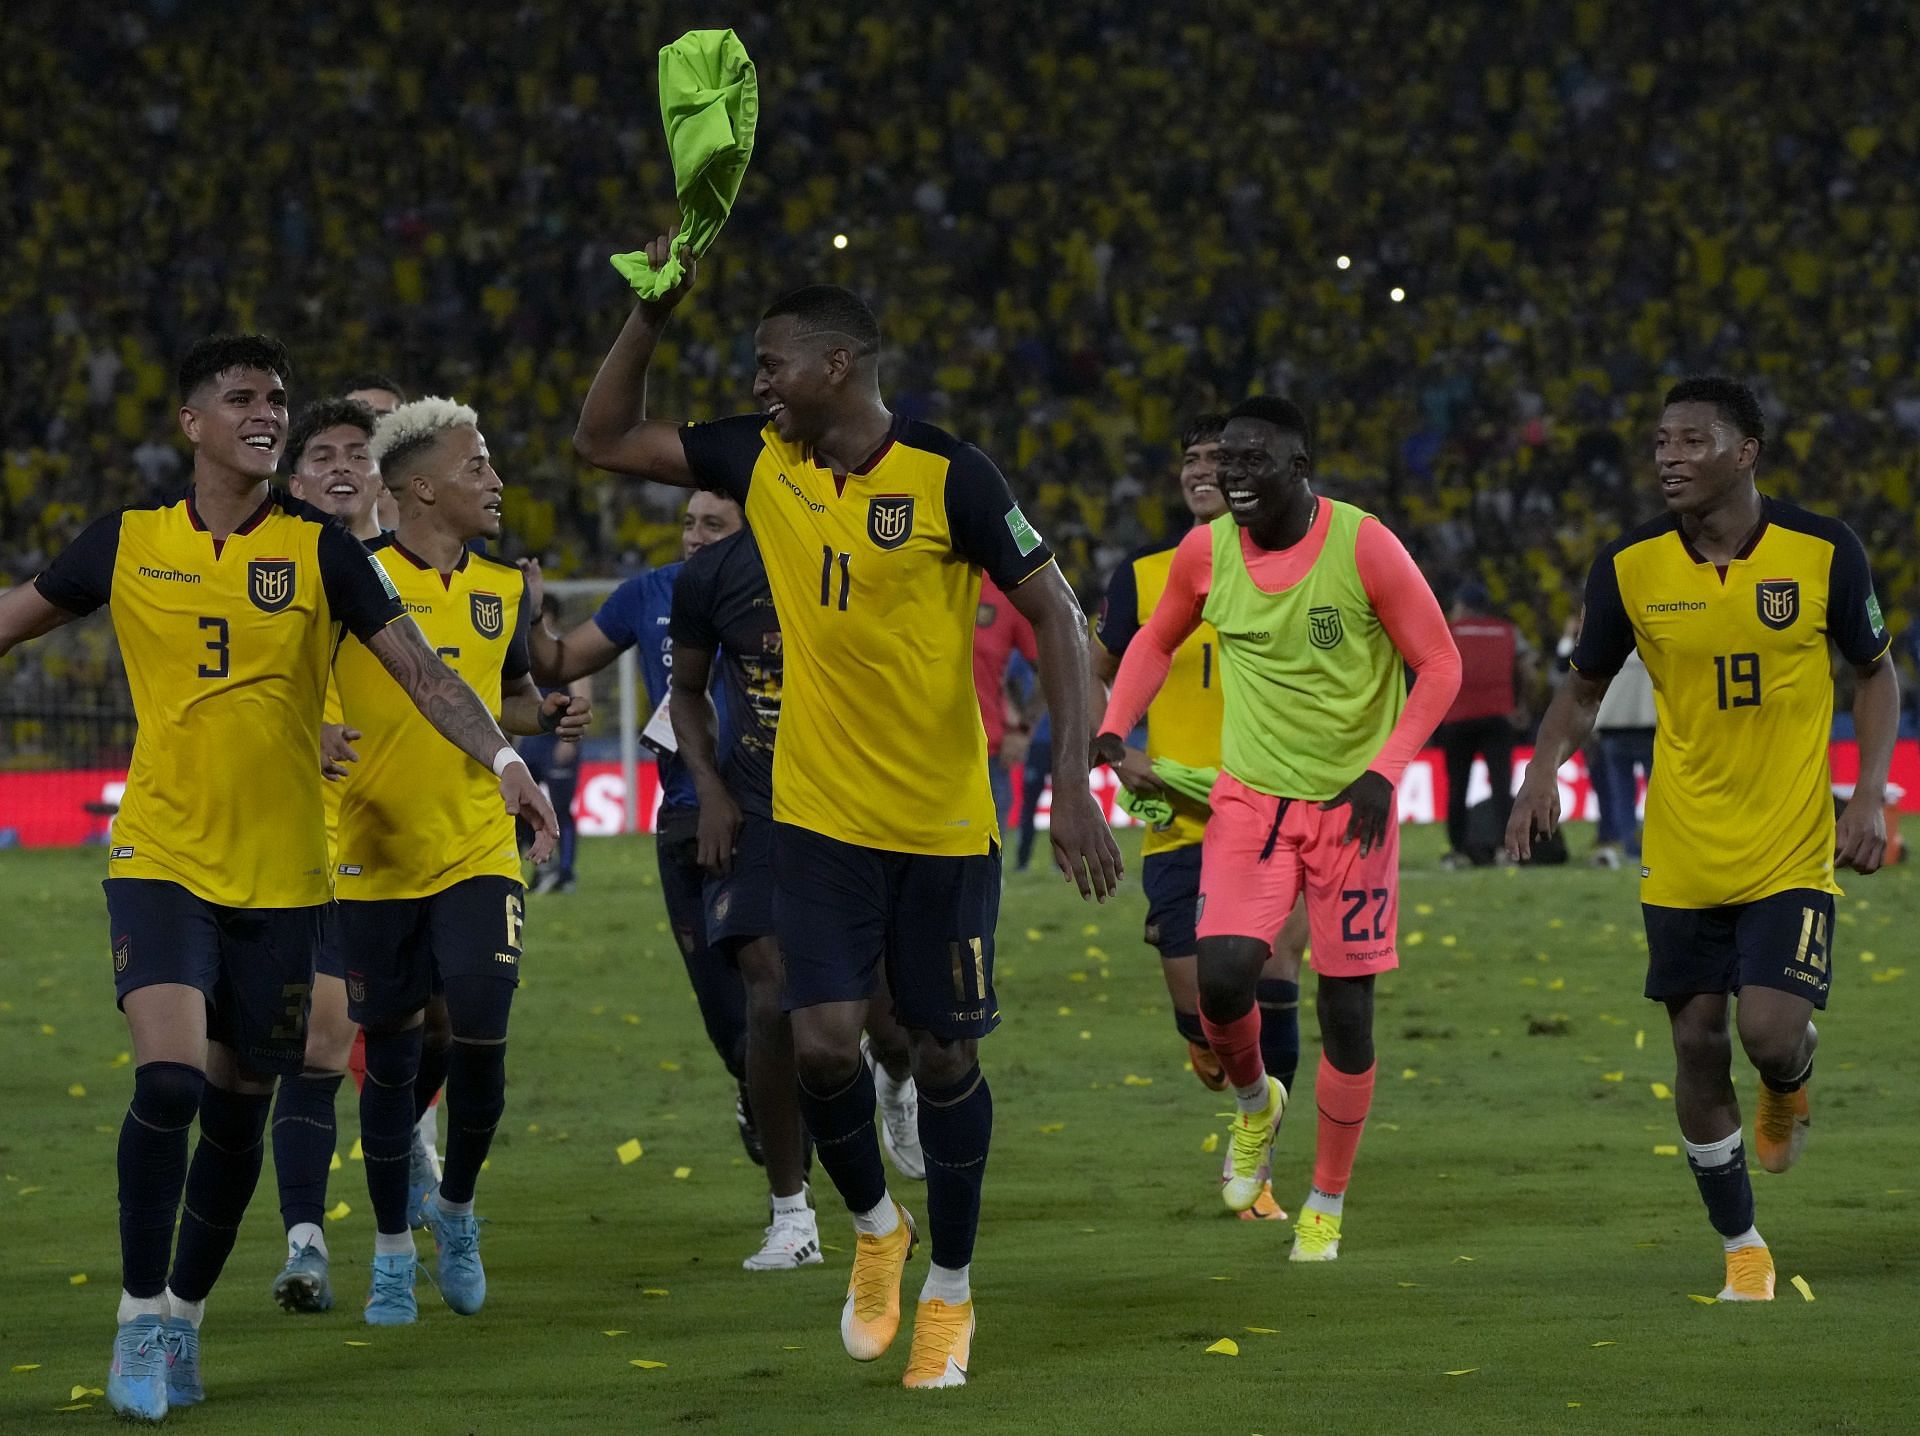 Ecuador face Nigeria in a friendly fixture on Friday